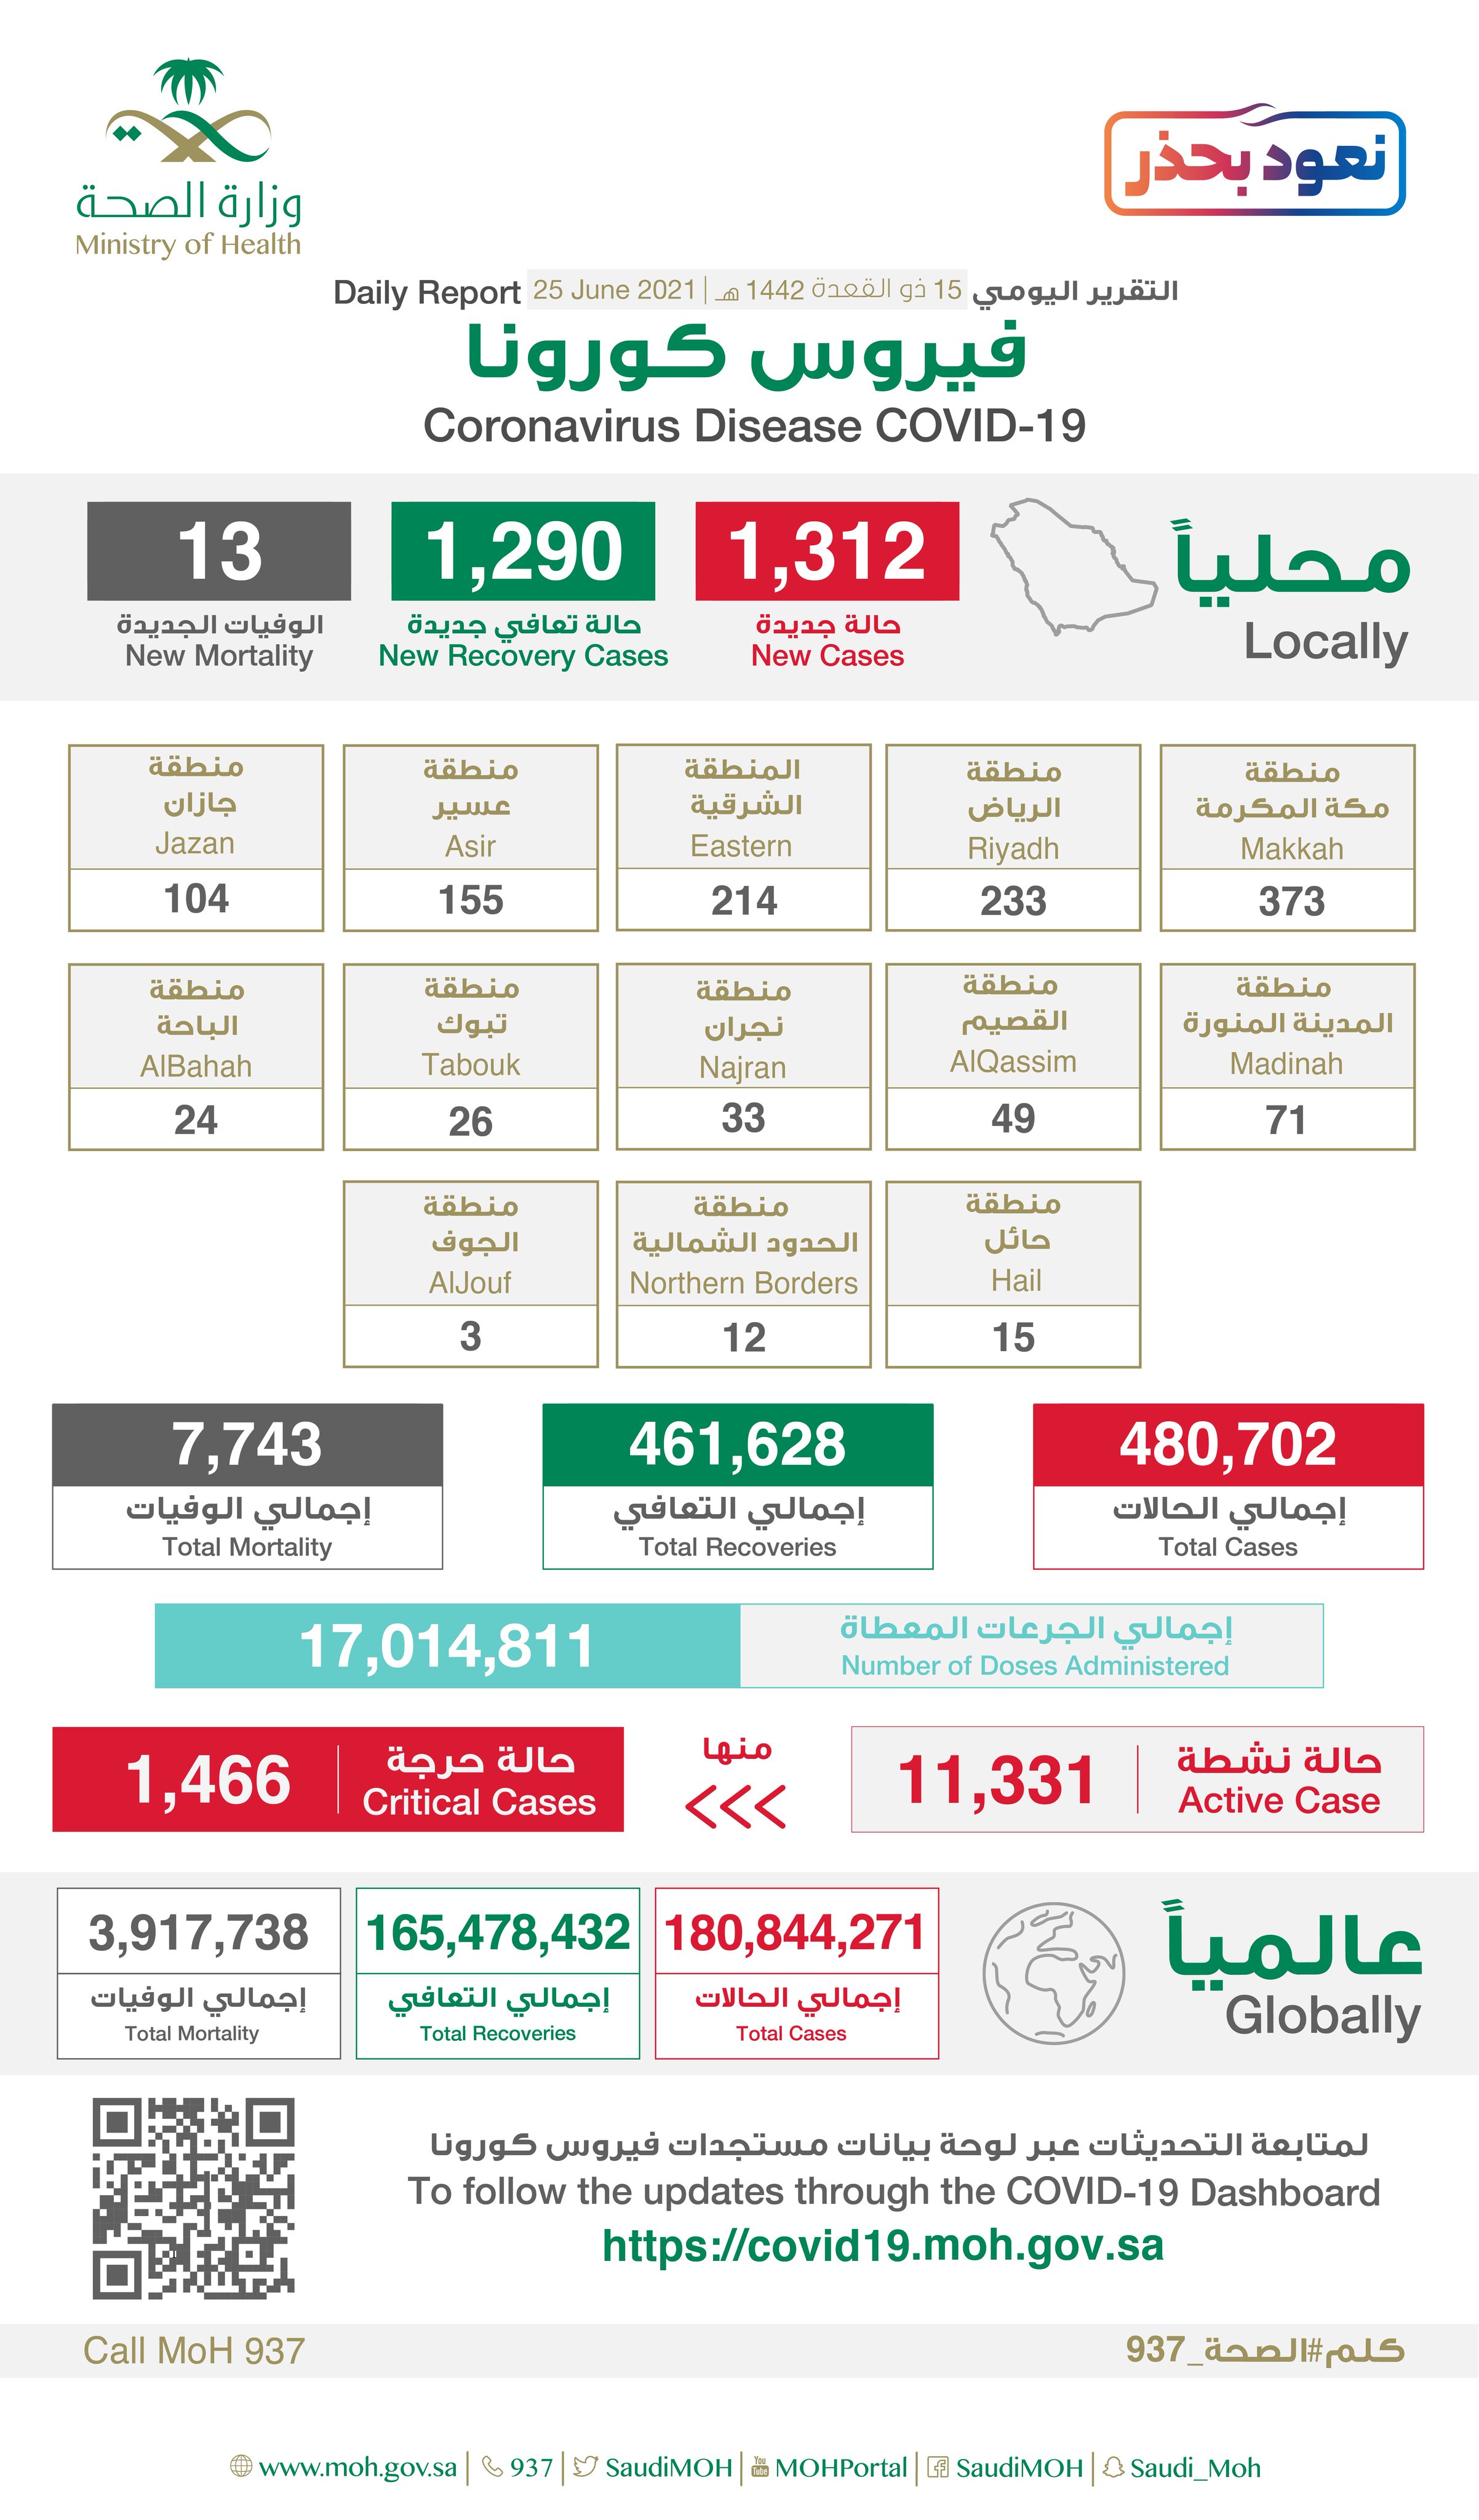 Saudi Arabia Coronavirus : Total Cases :480,702 , New Cases : 1,312 , Cured : 46,628 , Deaths: 7,743, Active Cases : 11,331